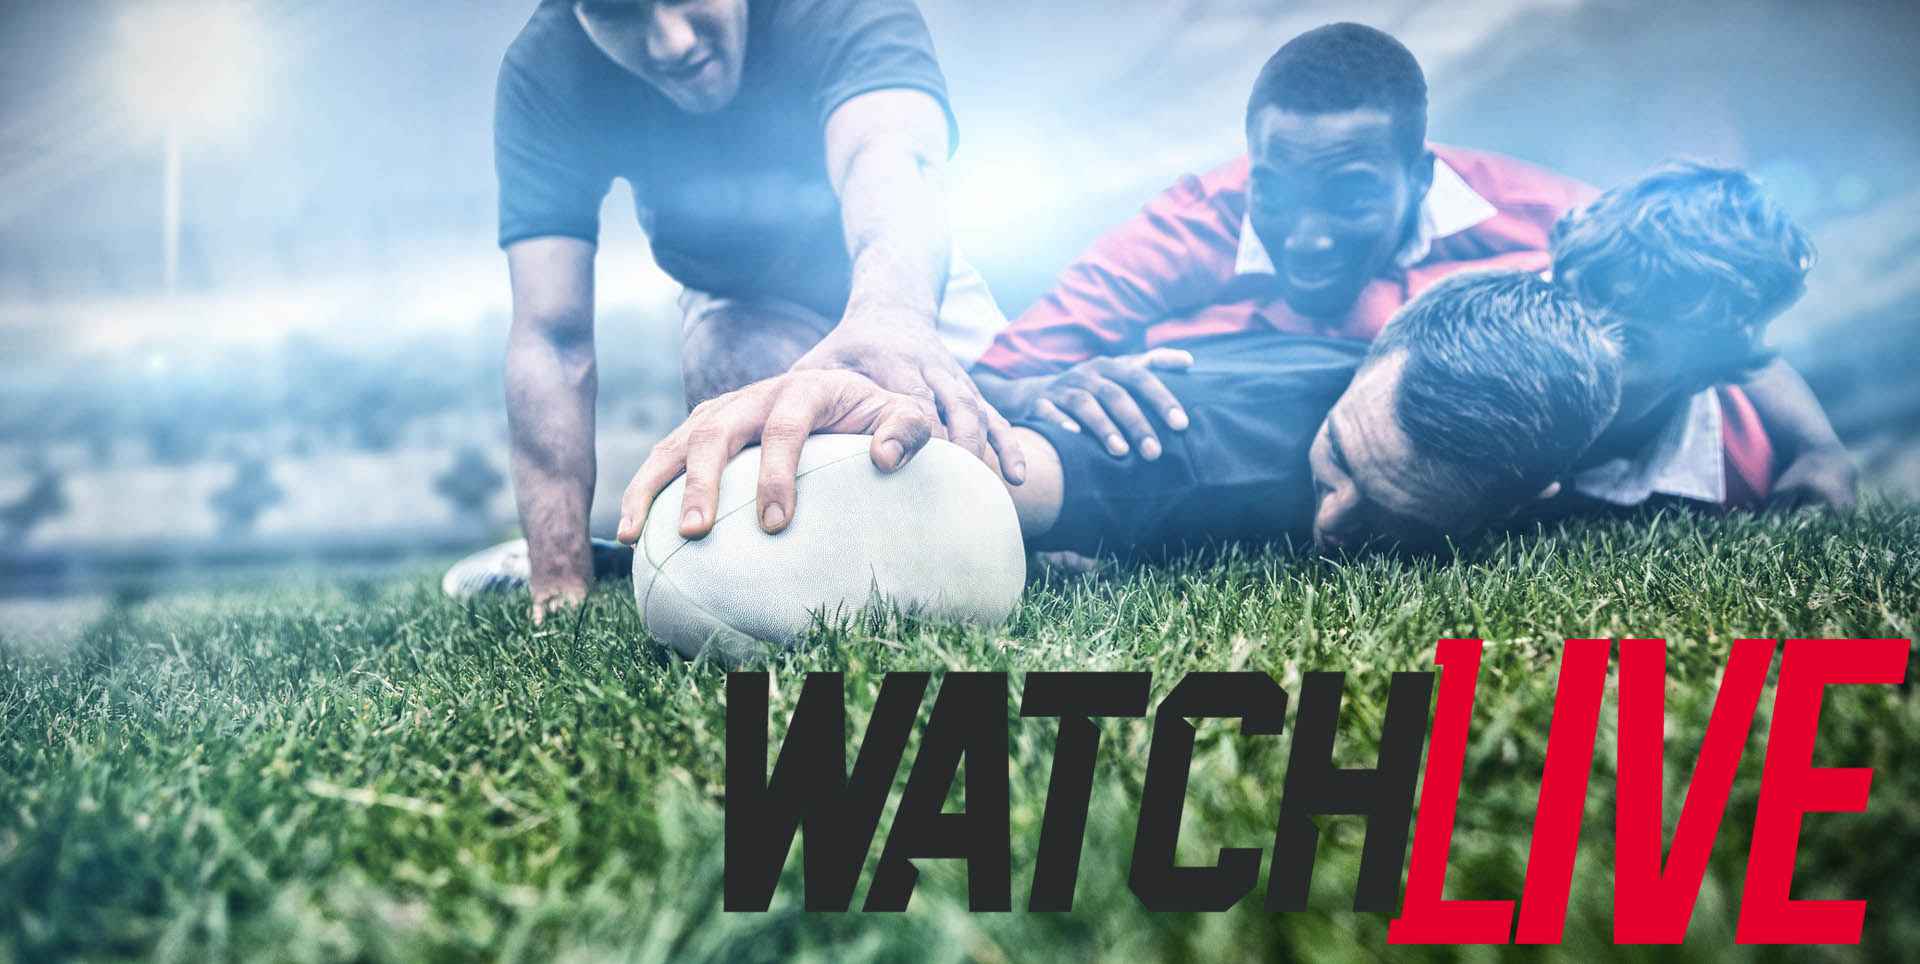 Fiji Rugby World Cup Team 2019 Live Stream